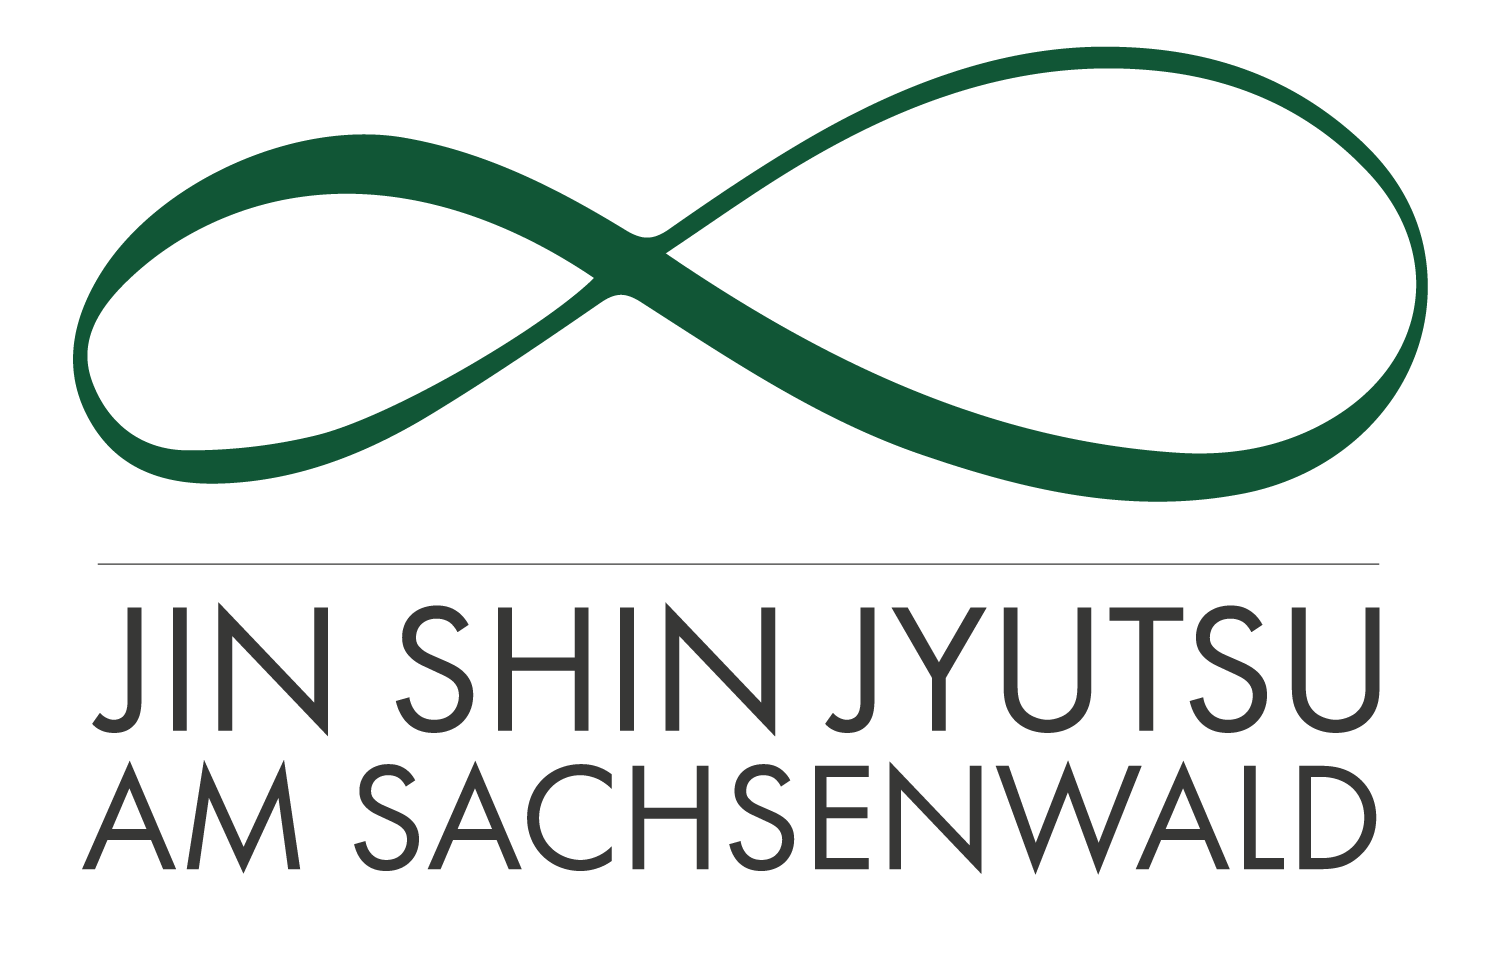 Jin Shin Jyutsu am Sachsenwald